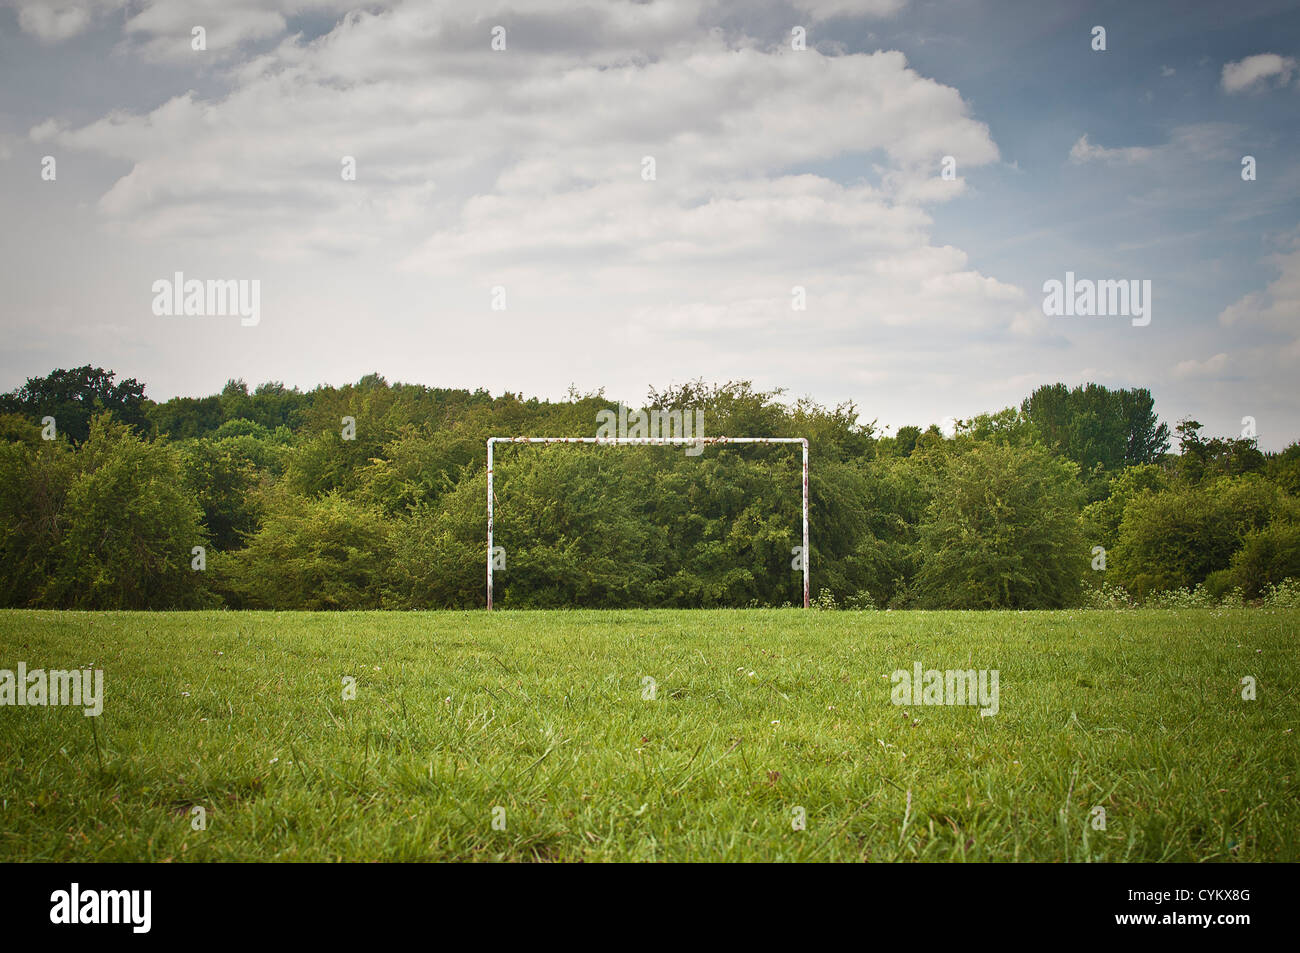 Soccer goal on grassy pitch Stock Photo